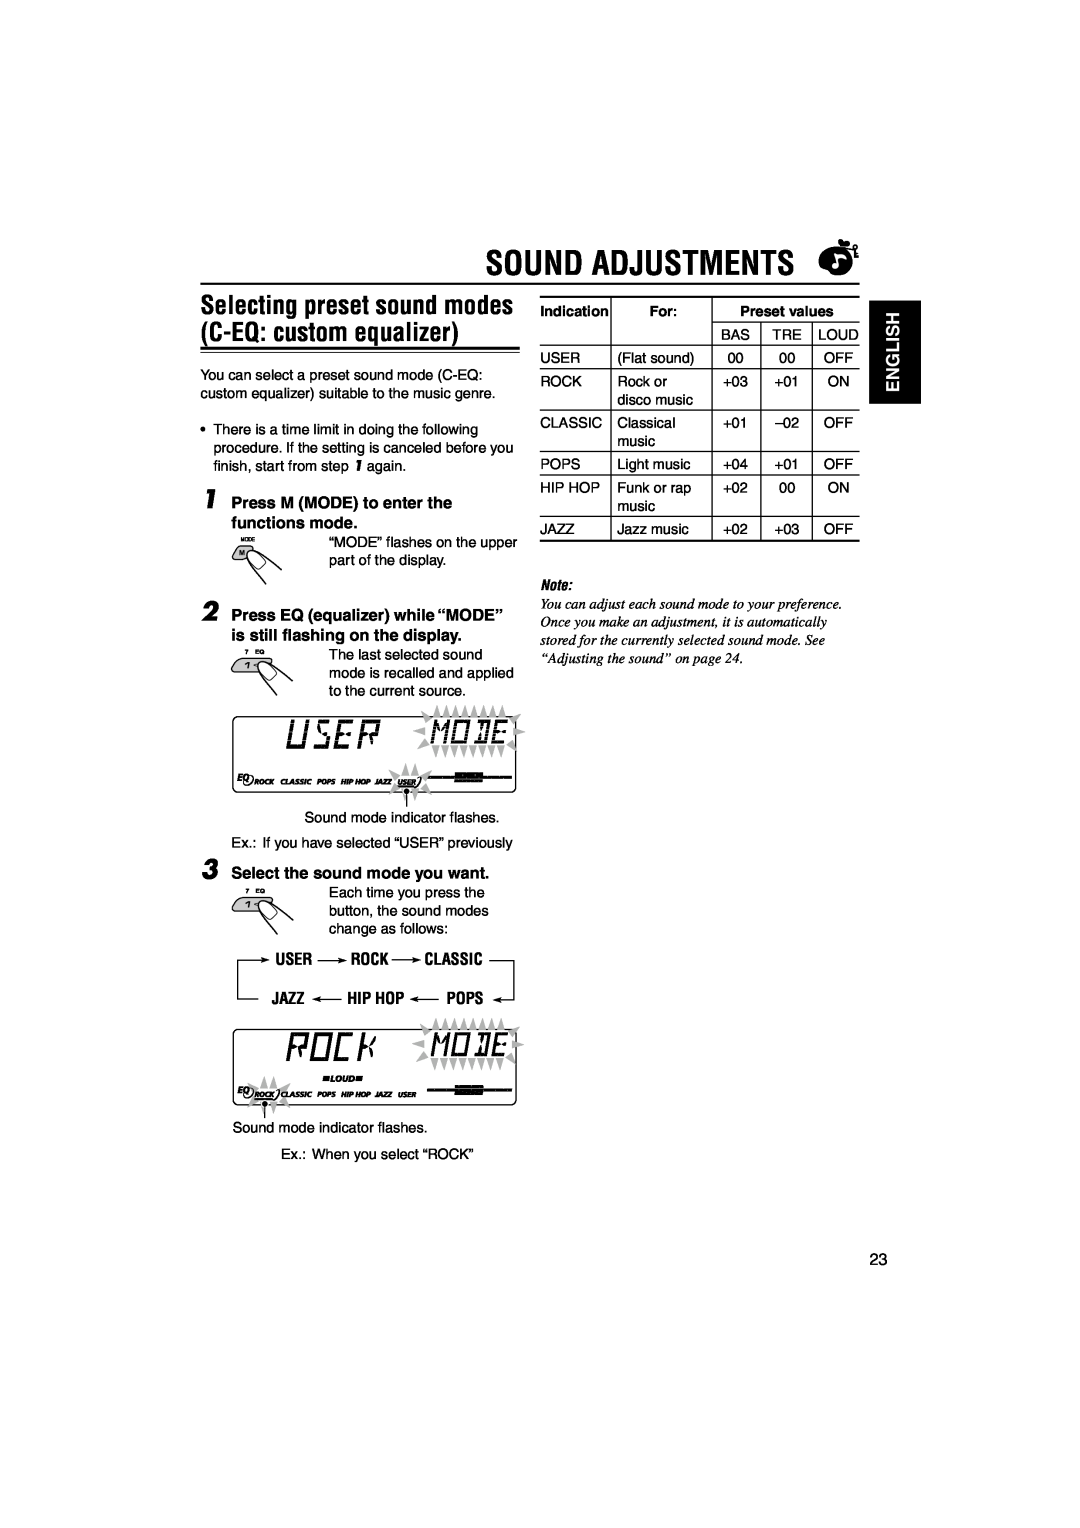 JVC KS-LH60R manual Sound Adjustments, Selecting preset sound modes C-EQ custom equalizer, English, User Rock Classic 